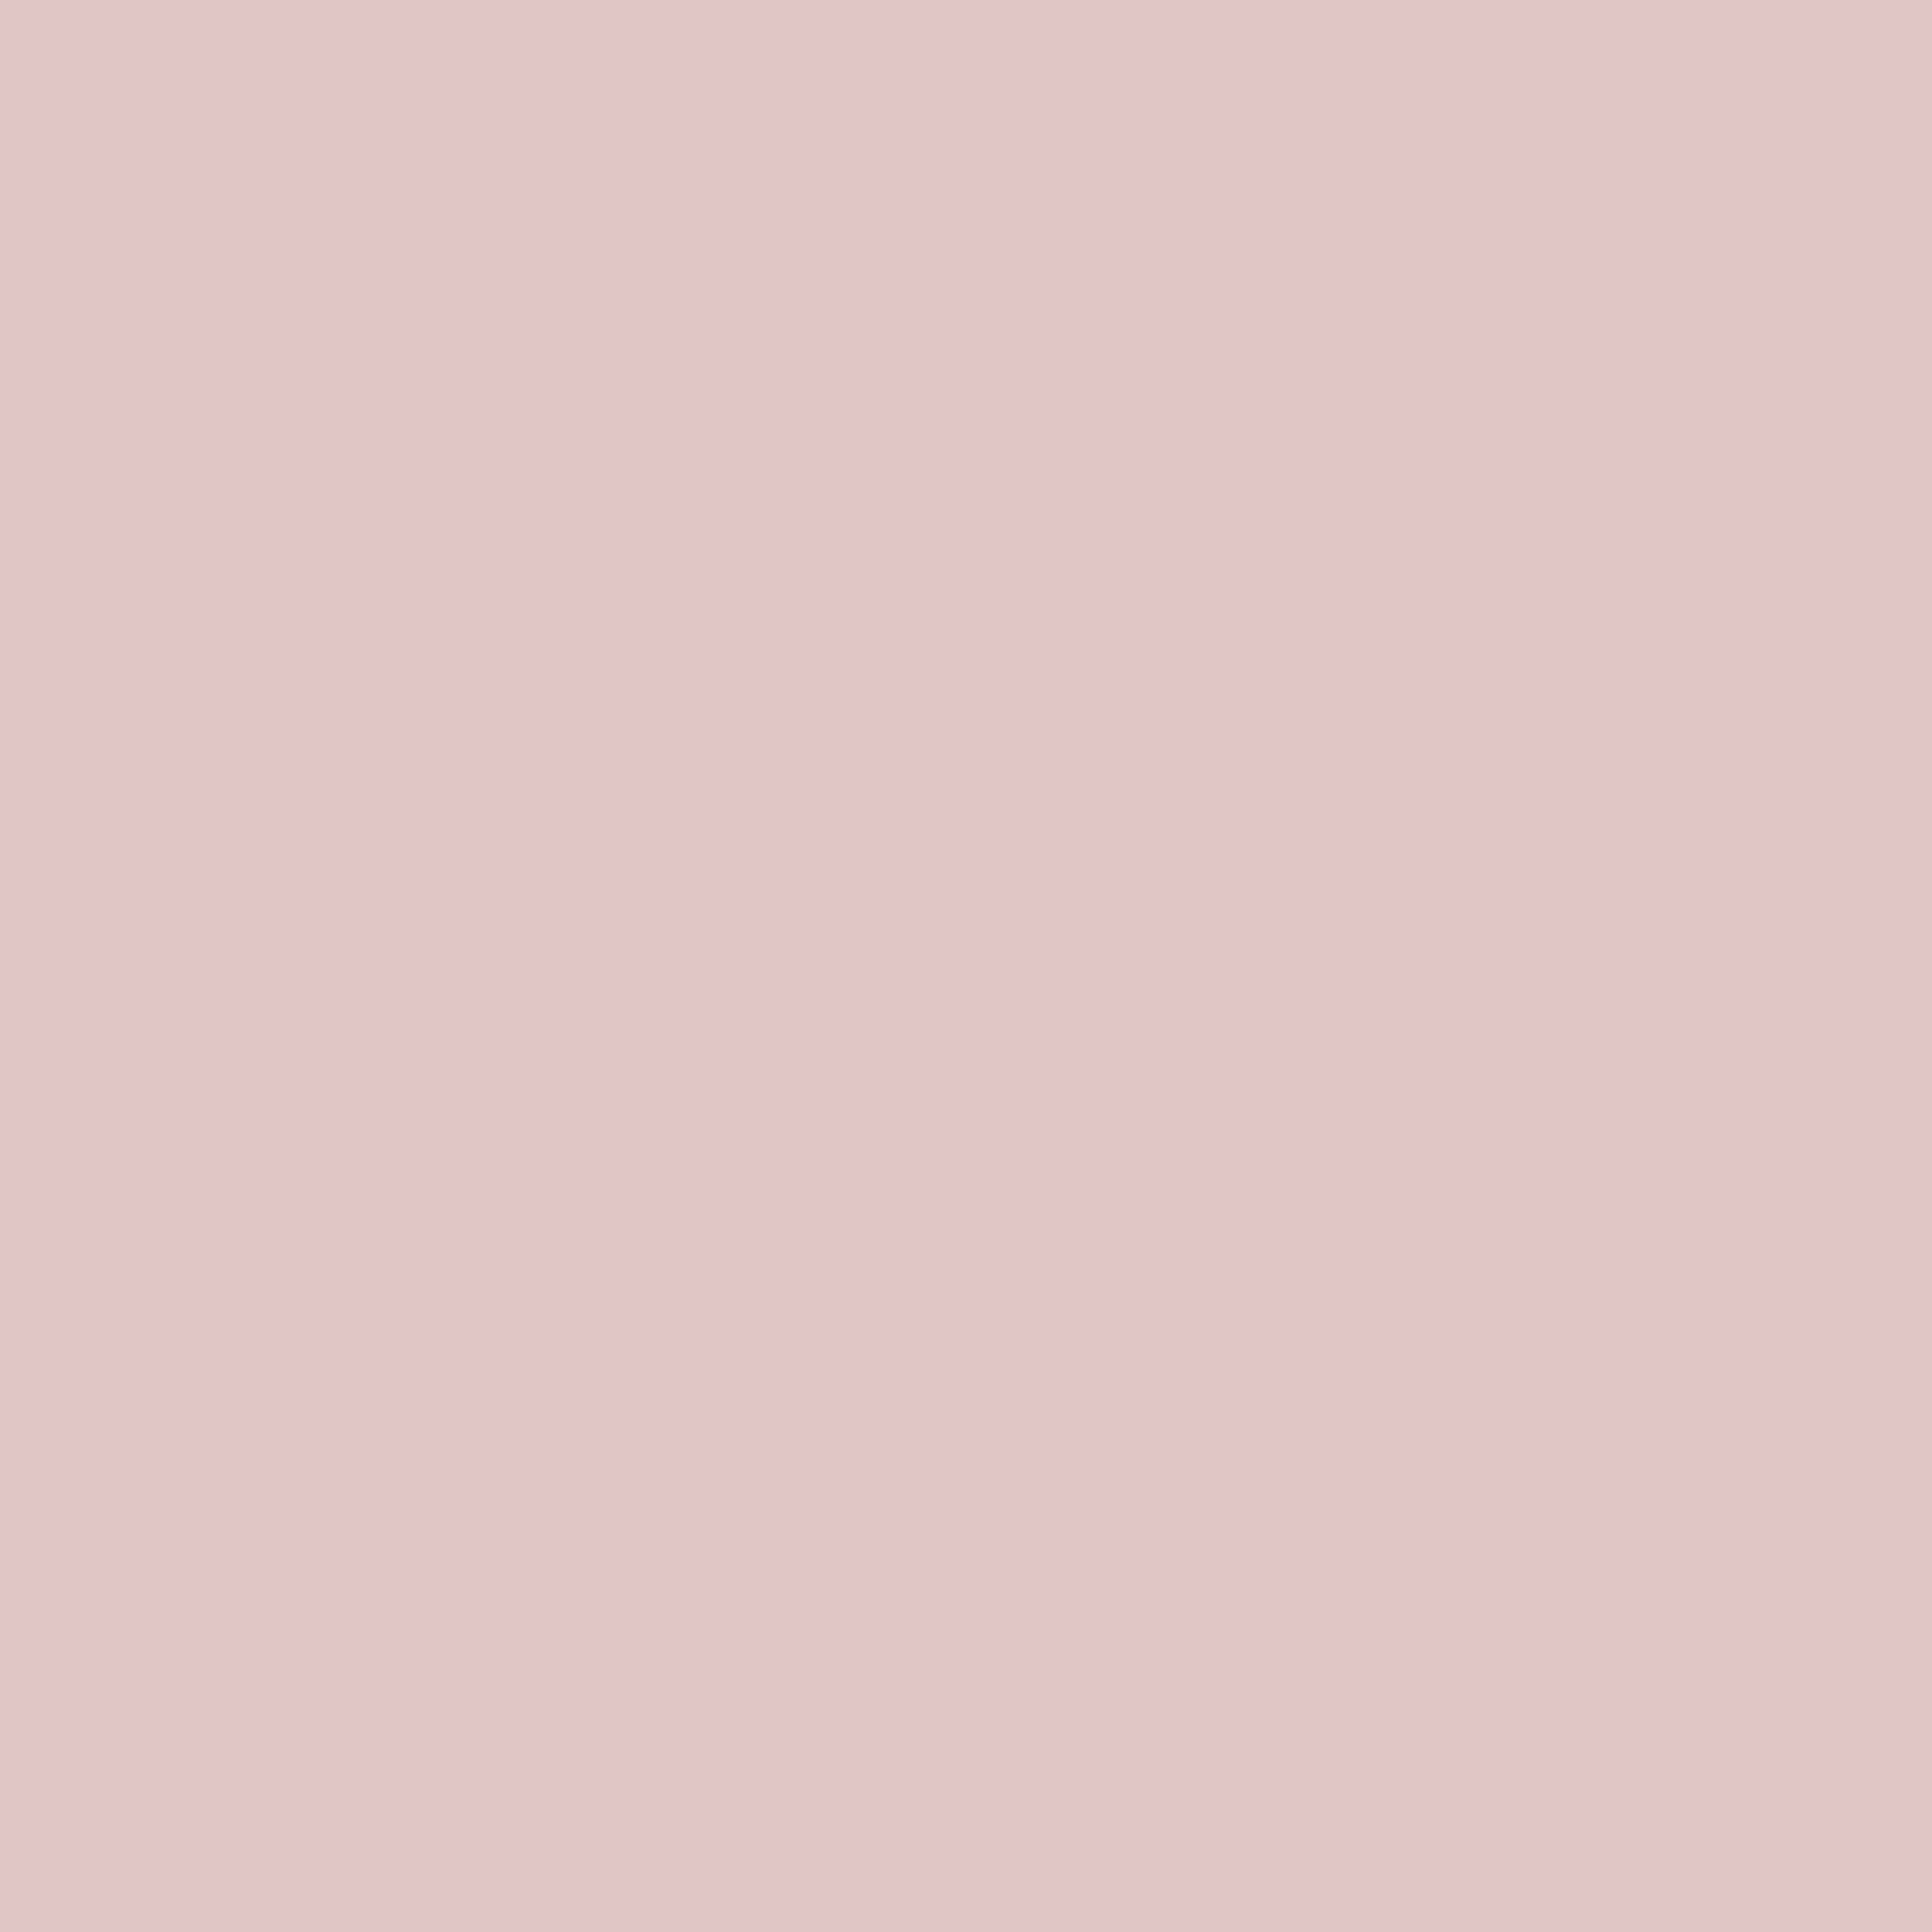 Pink beige abstract background wallpaper  Premium Photo  rawpixel